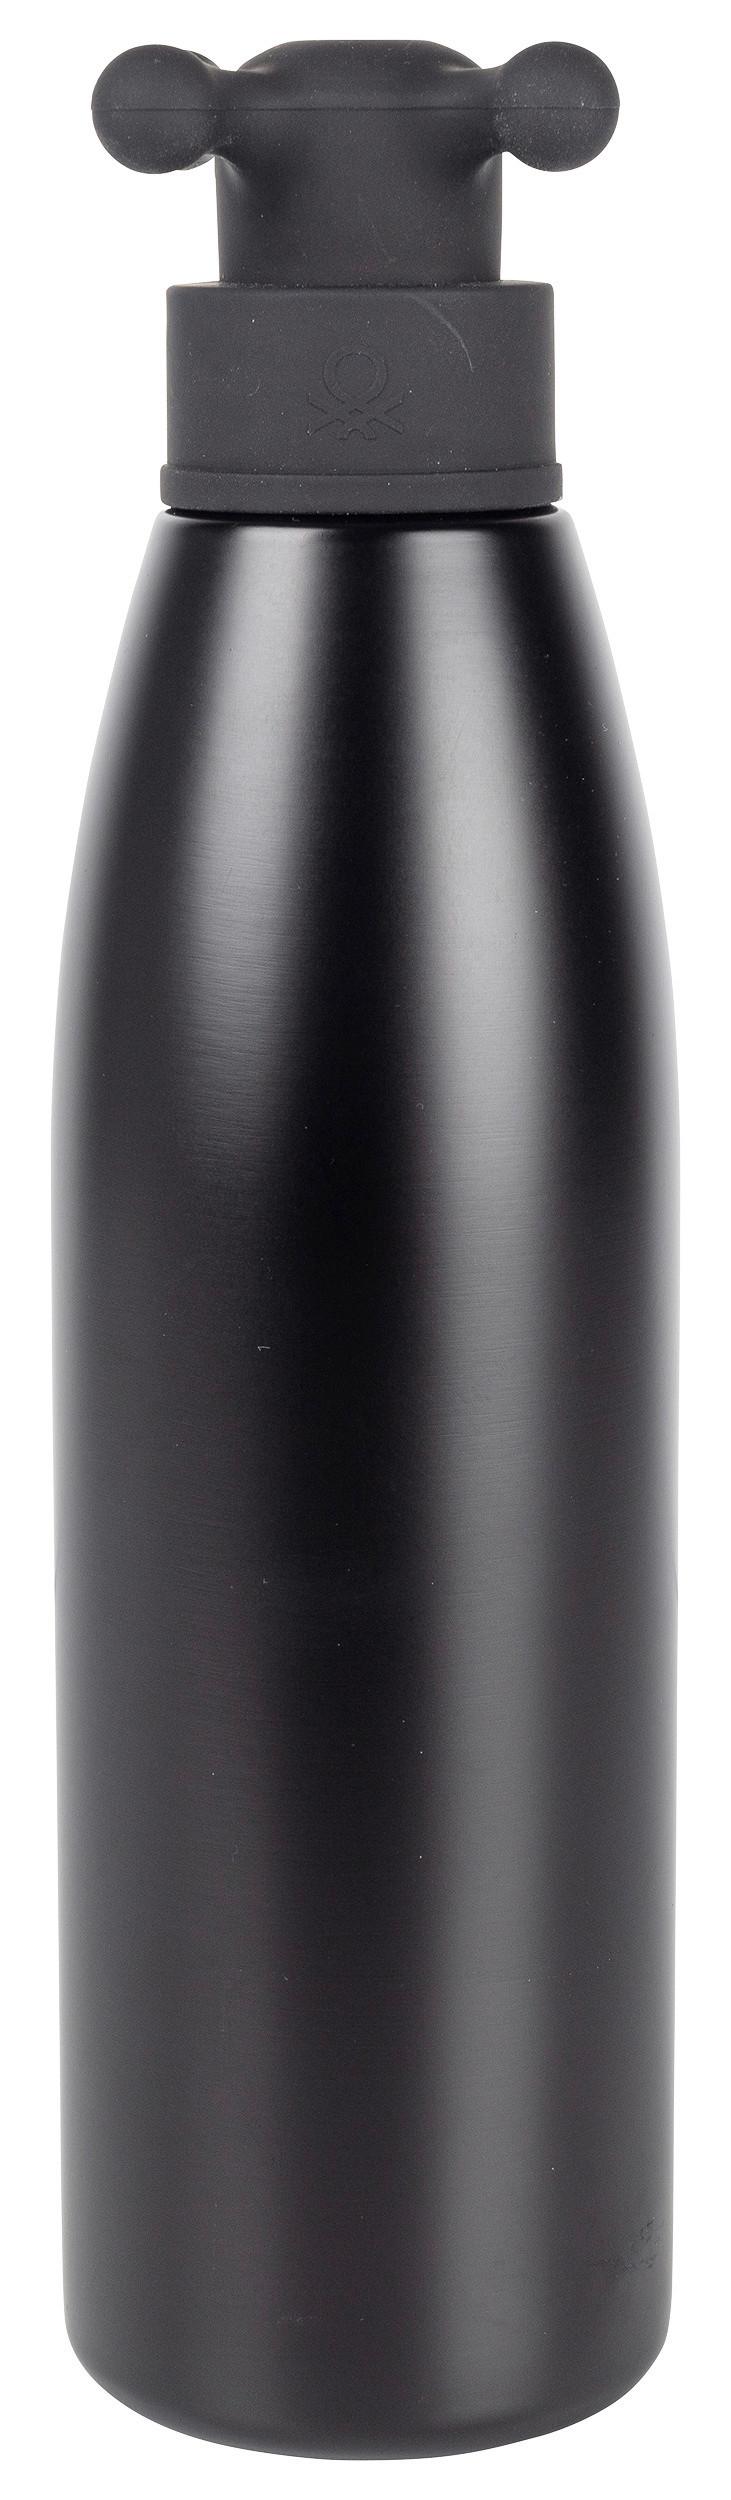 Trinkflasche Black & White 0,5 L Kunststoff Lebensmittelecht - Schwarz, Basics, Kunststoff/Metall (7,4/7/26,5cm) - Benetton